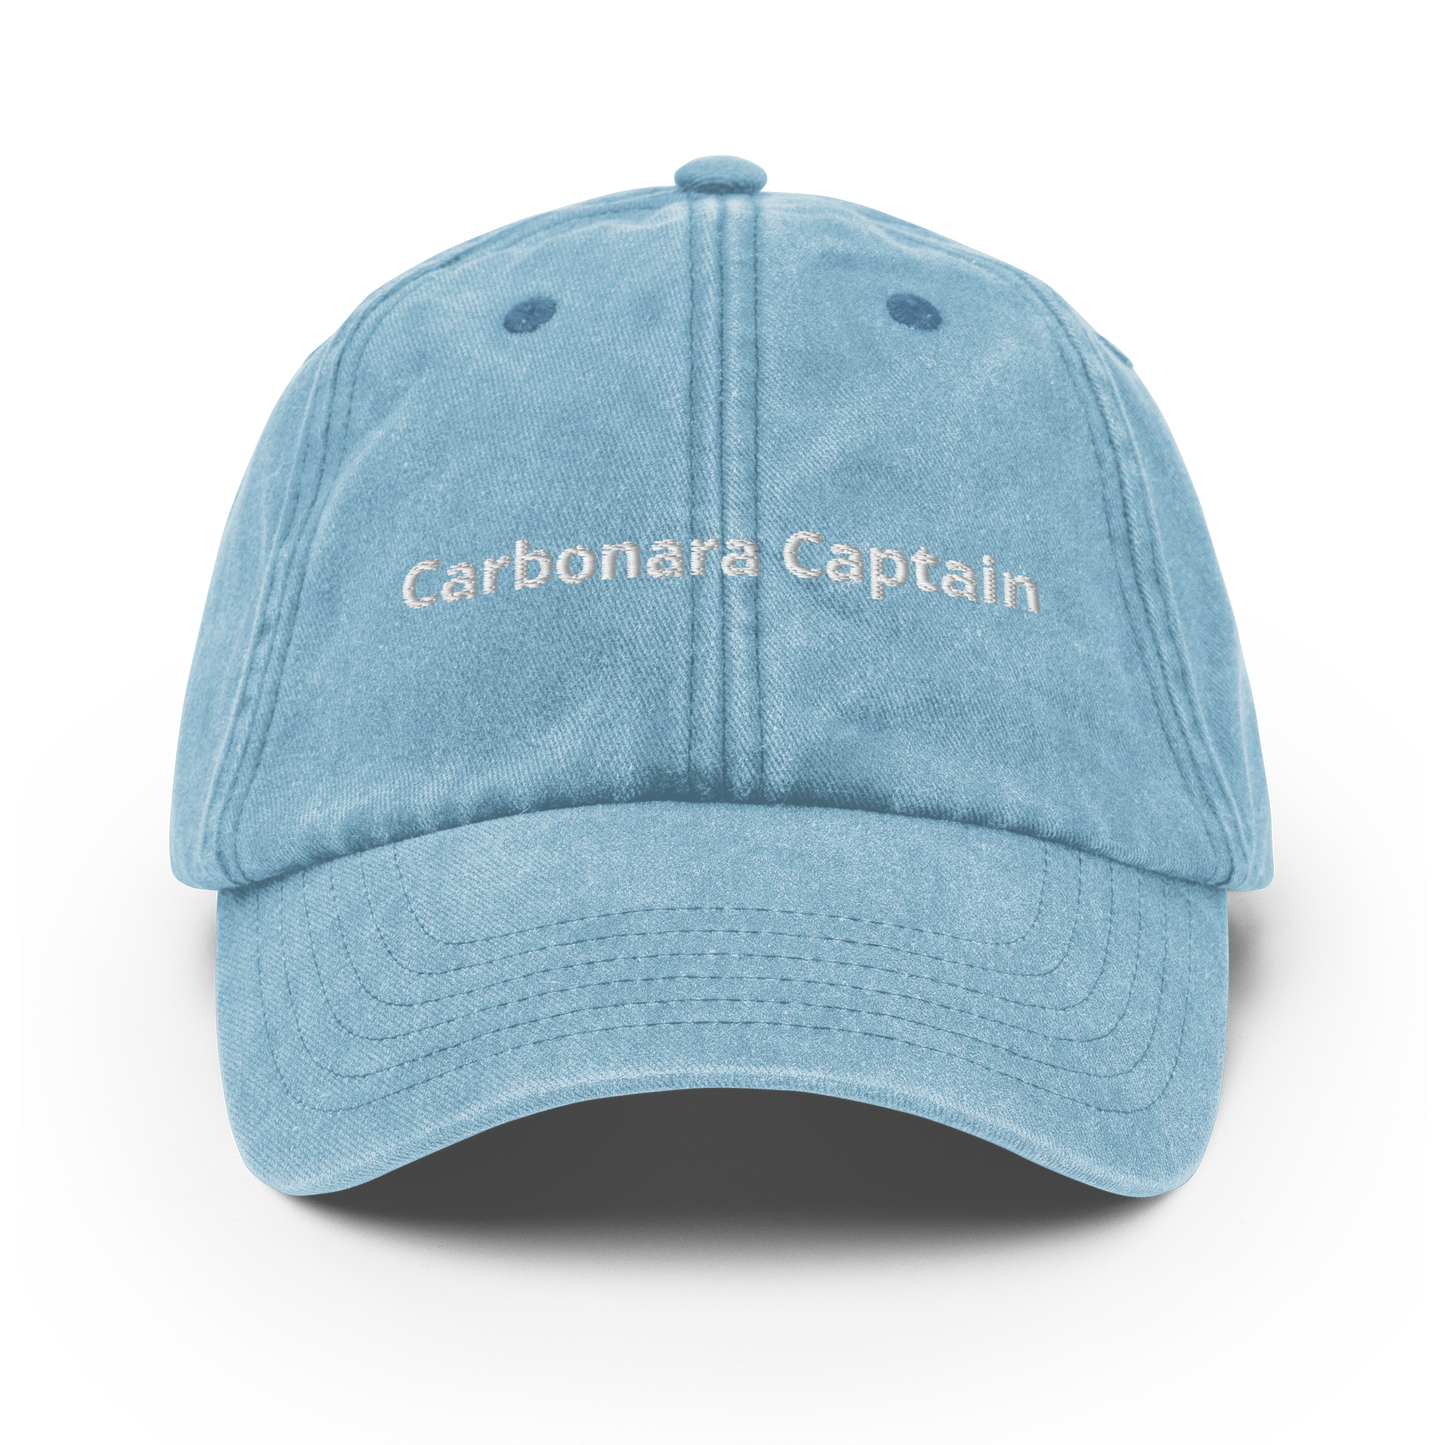 Carbonara Captain - Vintage Hat